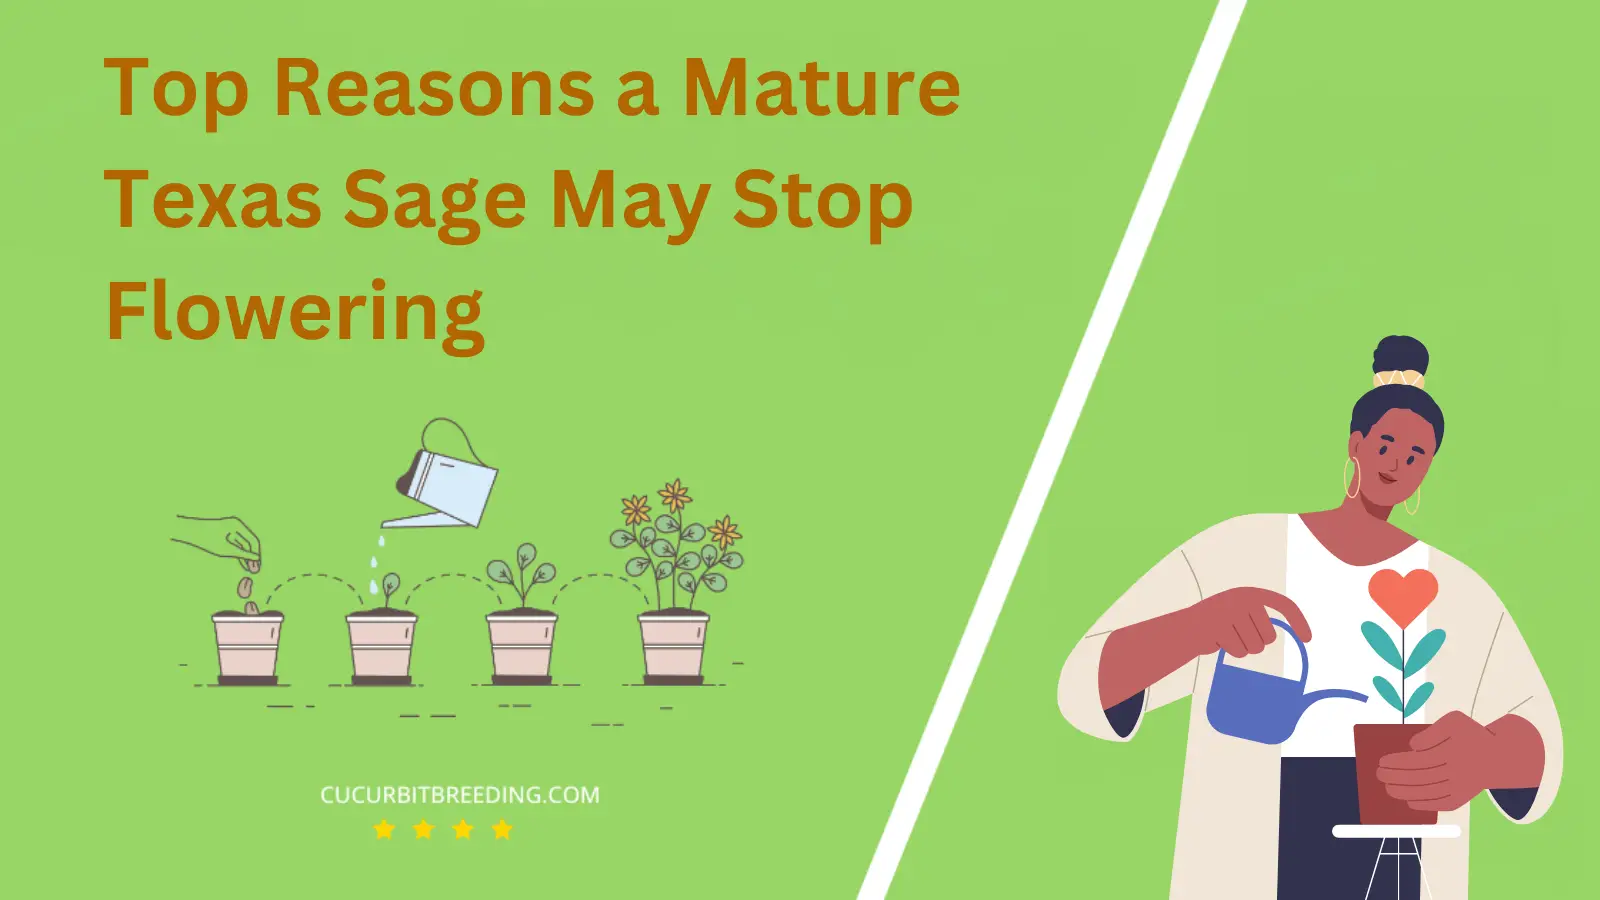 Top Reasons a Mature Texas Sage May Stop Flowering